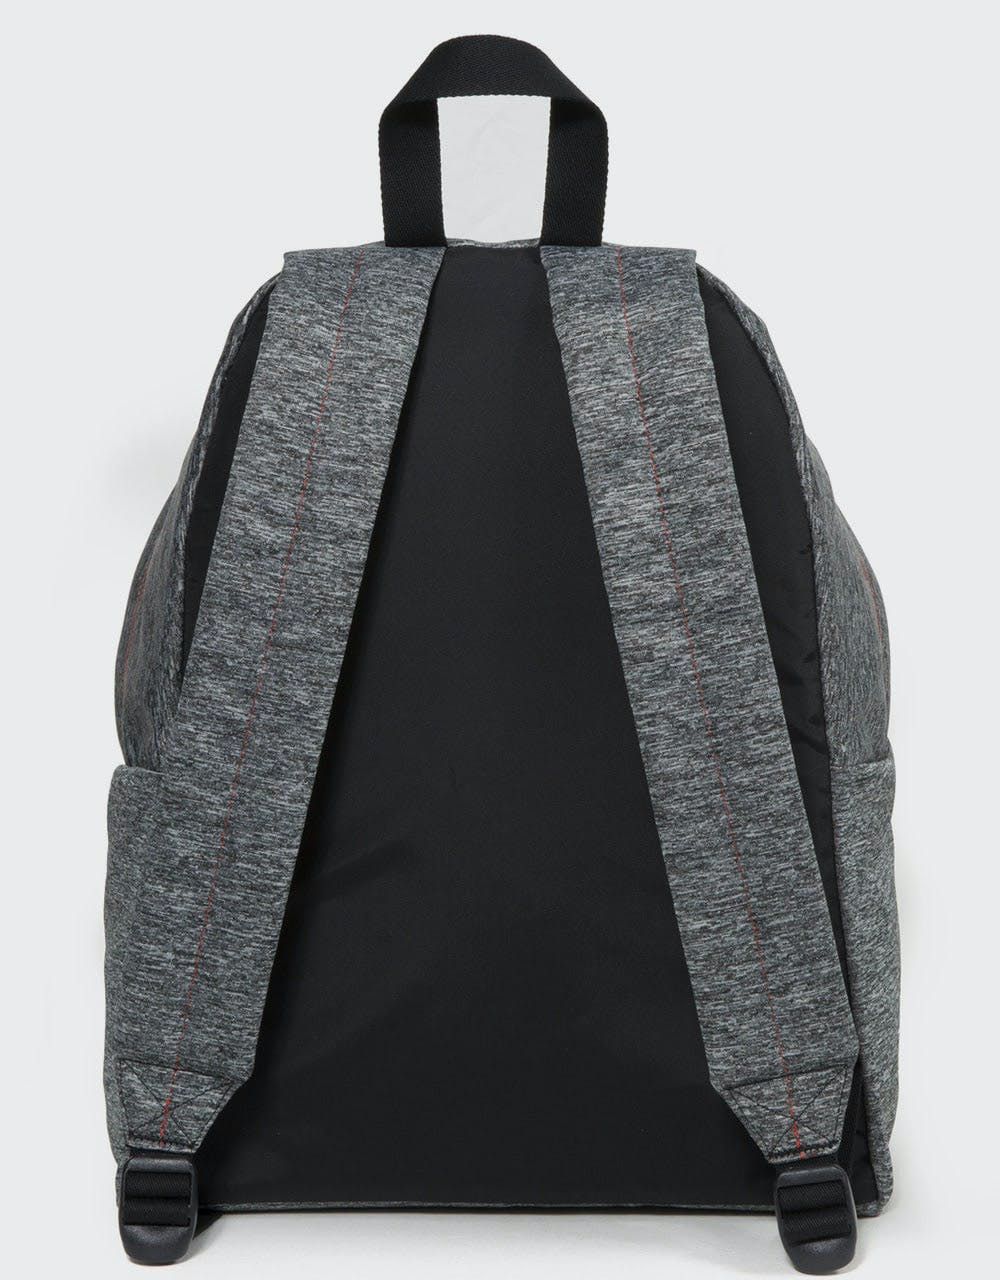 Eastpak Padded Doubl'R Backpack - Dark Jersey